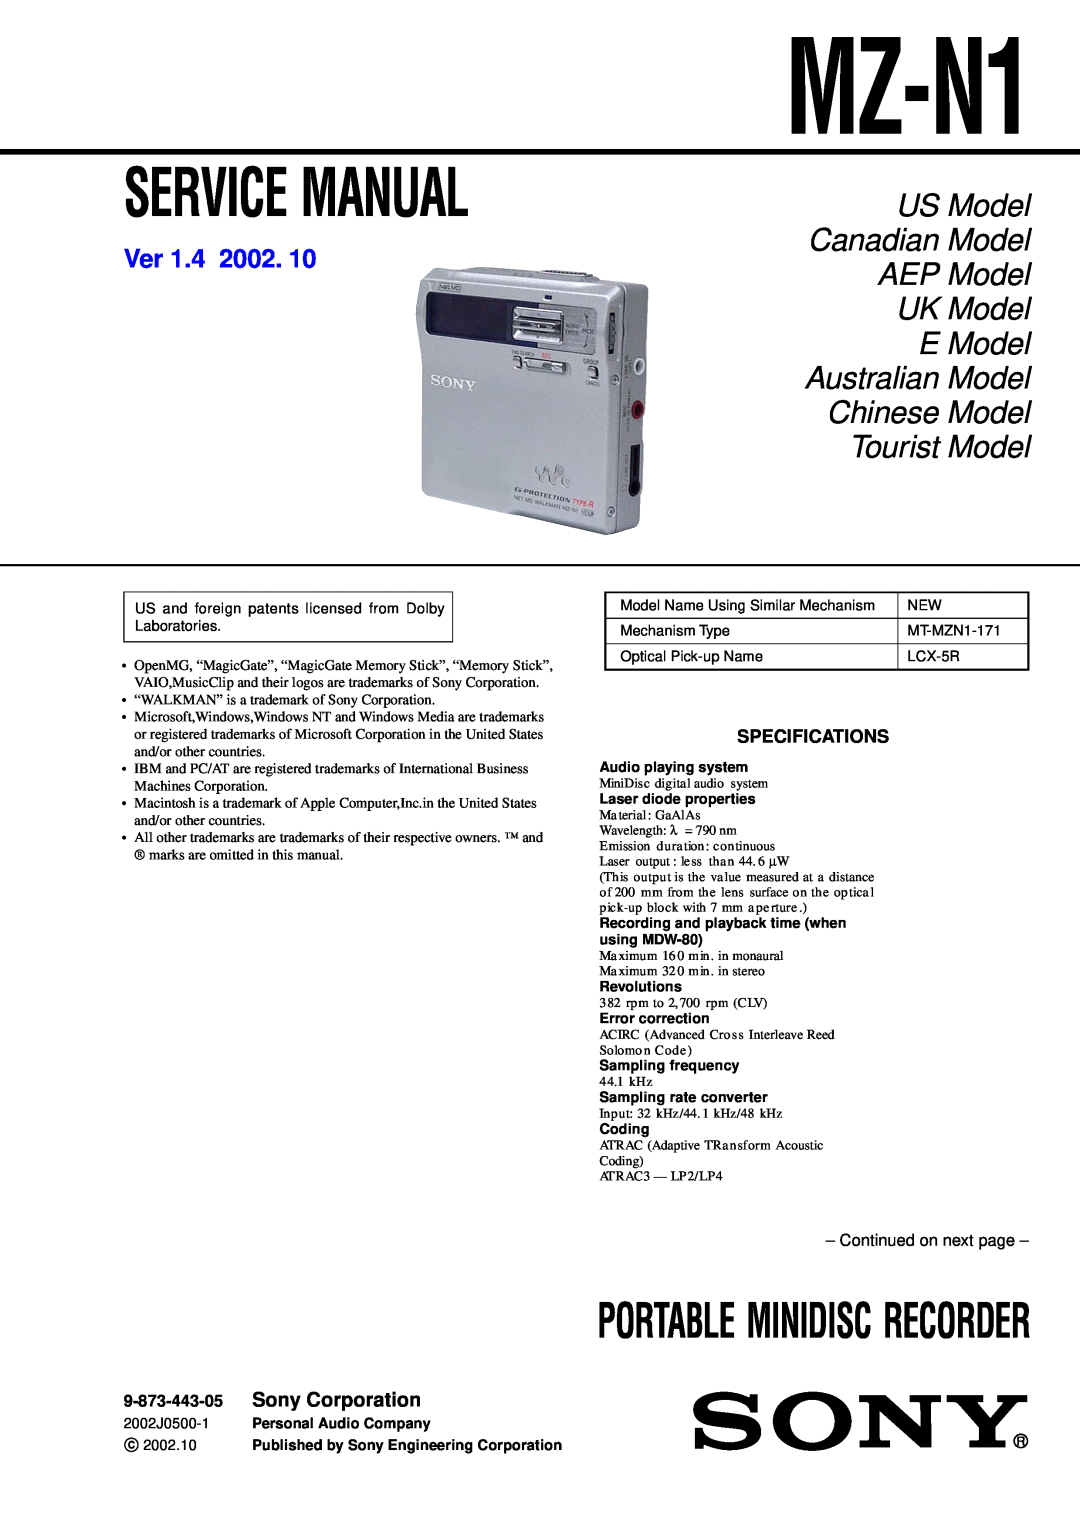 Sony MZ-N1 service manual Portable Minidisc Recorder, US Model, Canadian Model, AEP Model, UK Model, E Model, Ver 